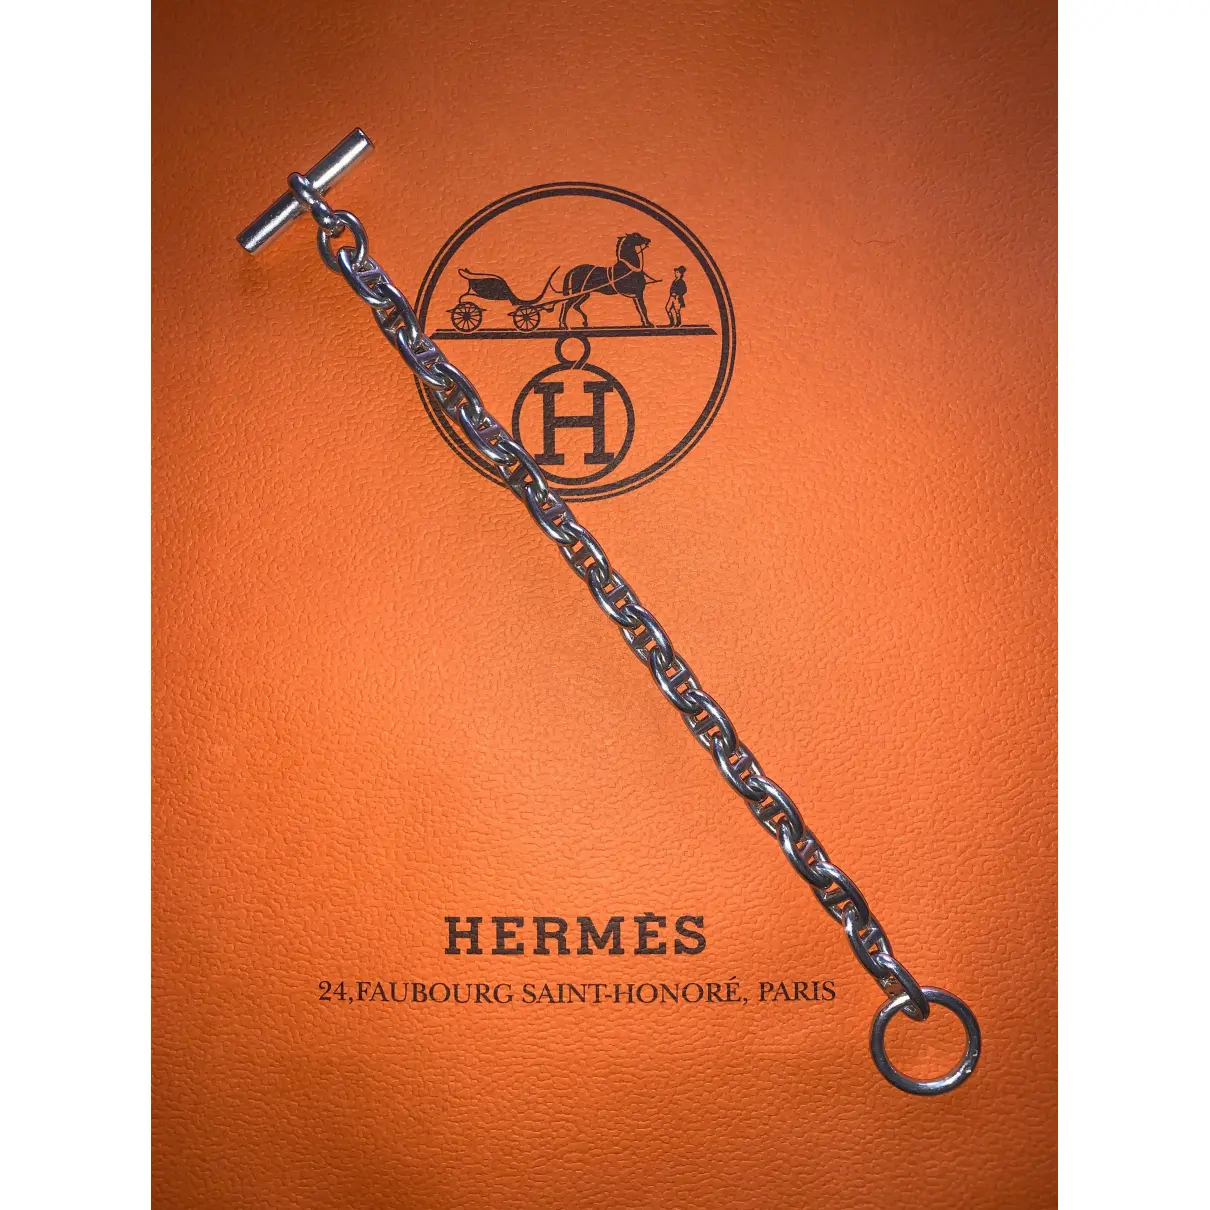 Buy Hermès Chaîne d'Ancre silver bracelet online - Vintage